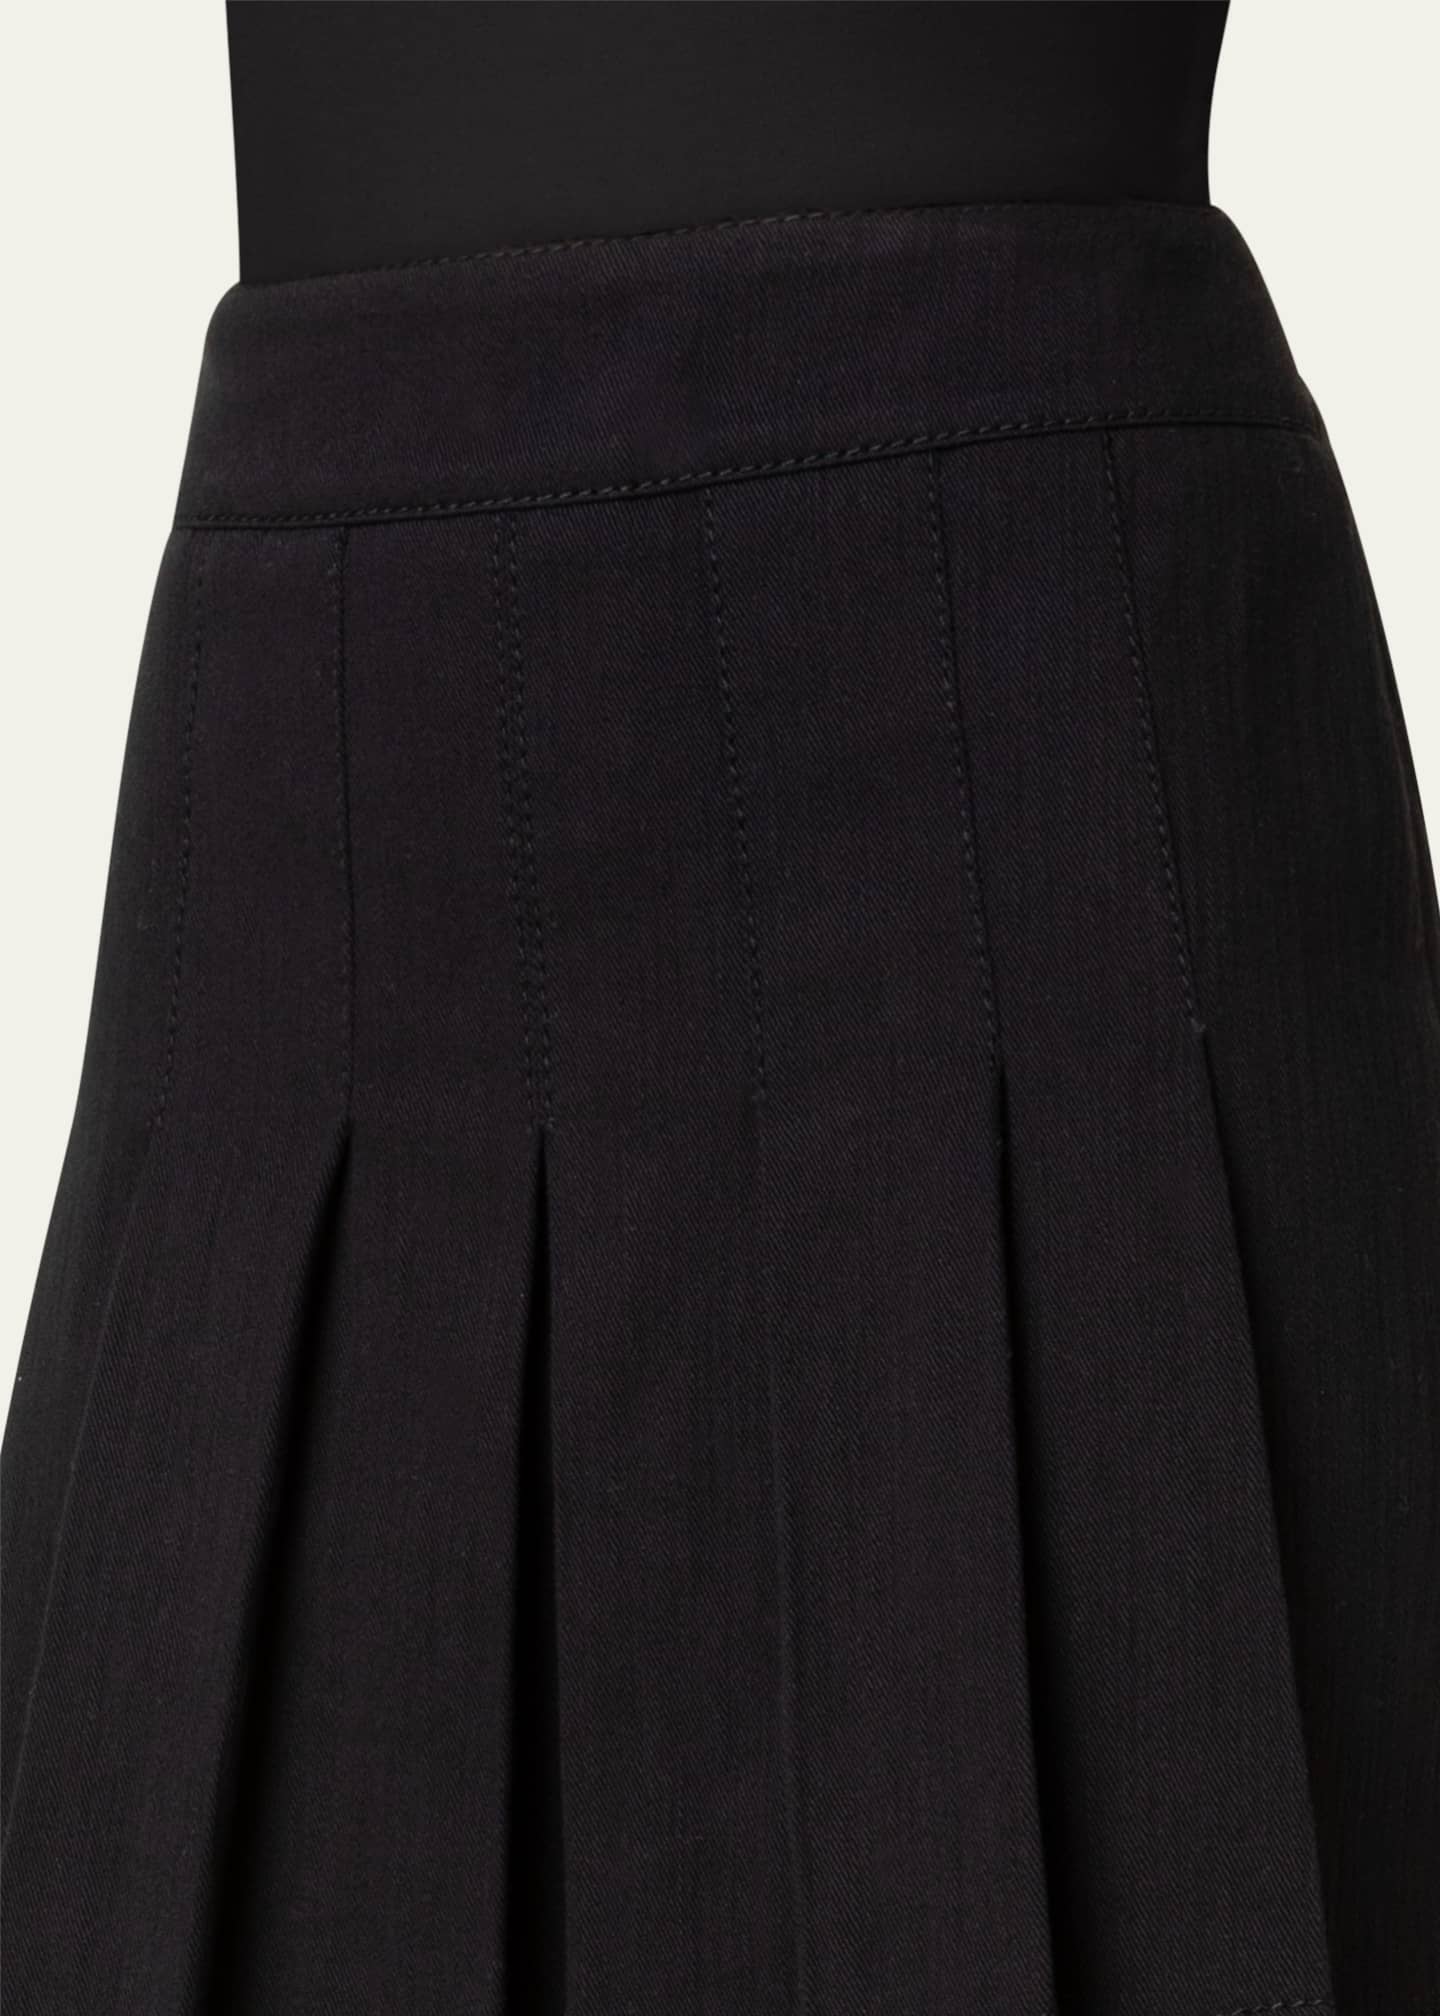 Akris punto Pleated Denim Mini Skirt - Bergdorf Goodman